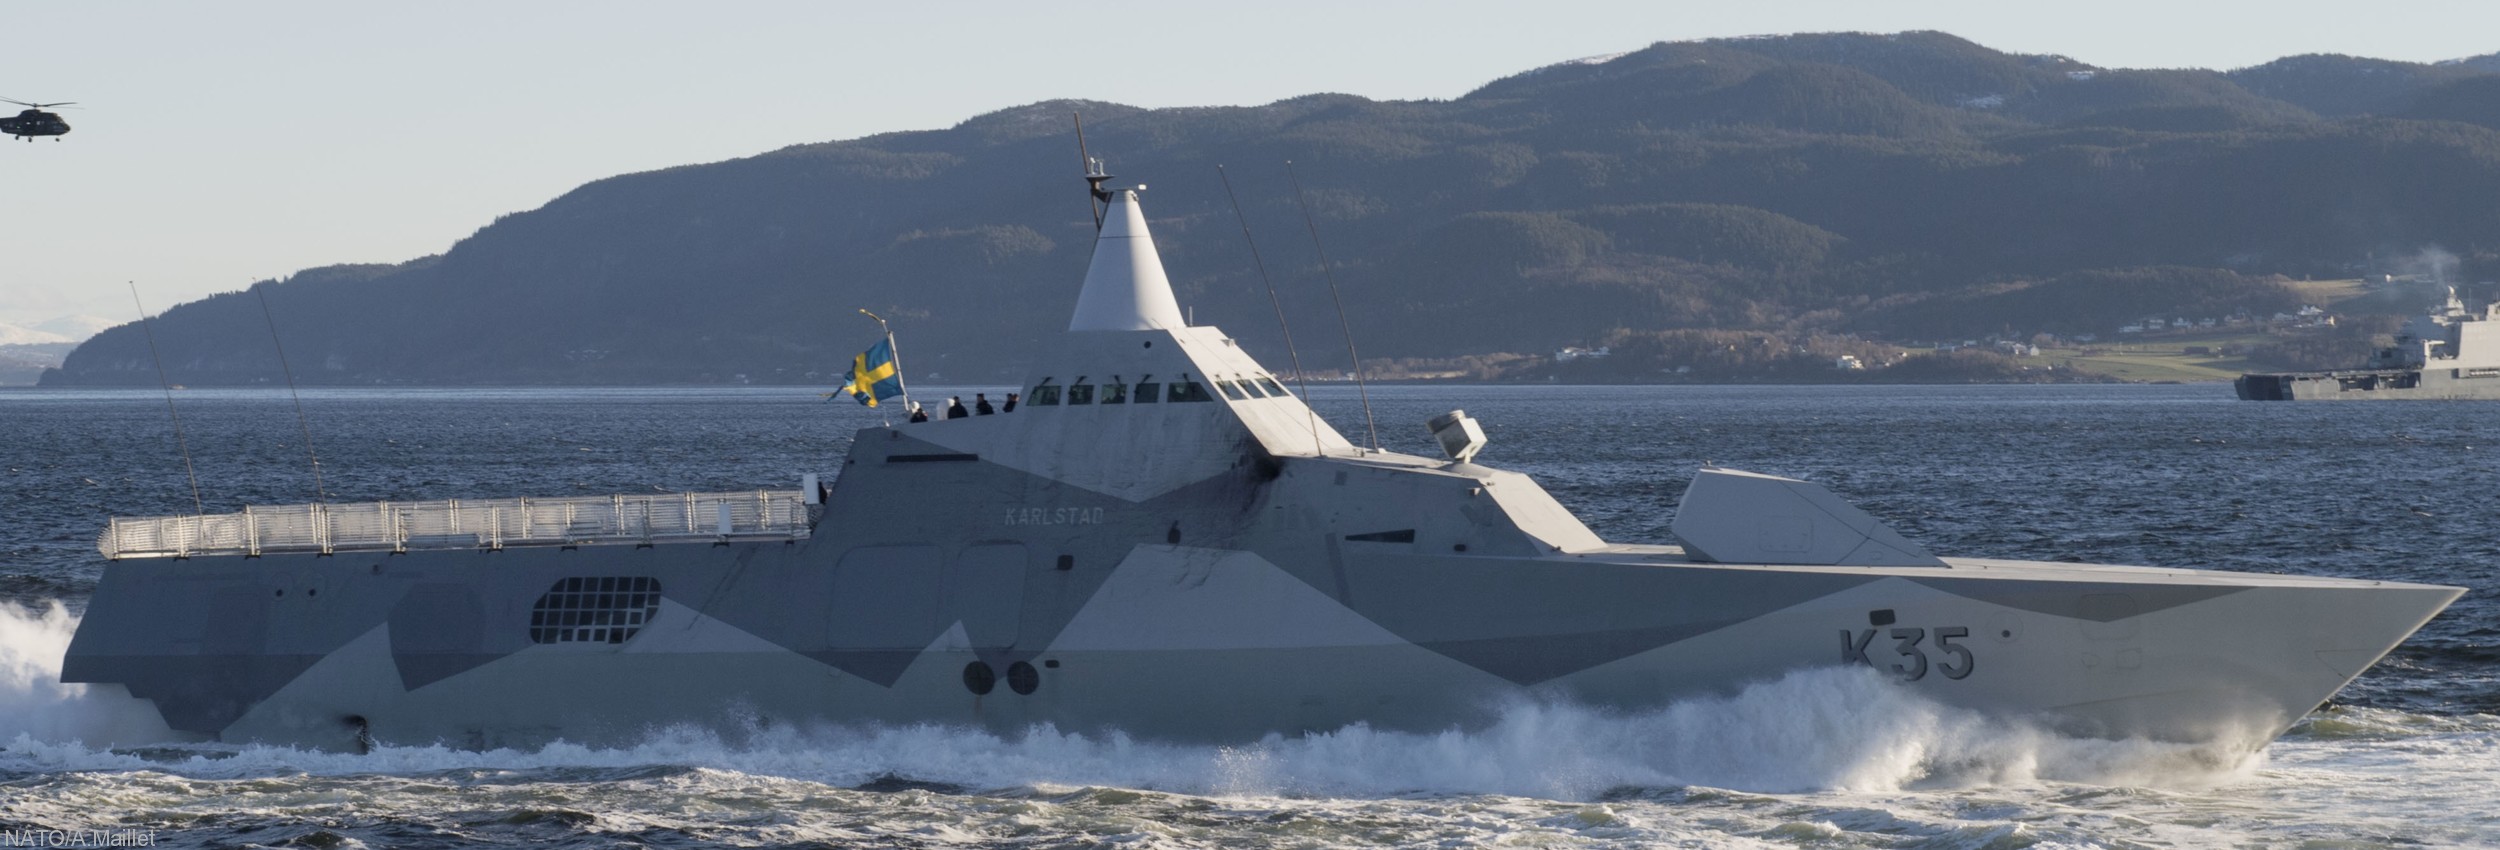 k35 hswms hms karlstad visby class corvette royal swedish navy svenska marinen 19